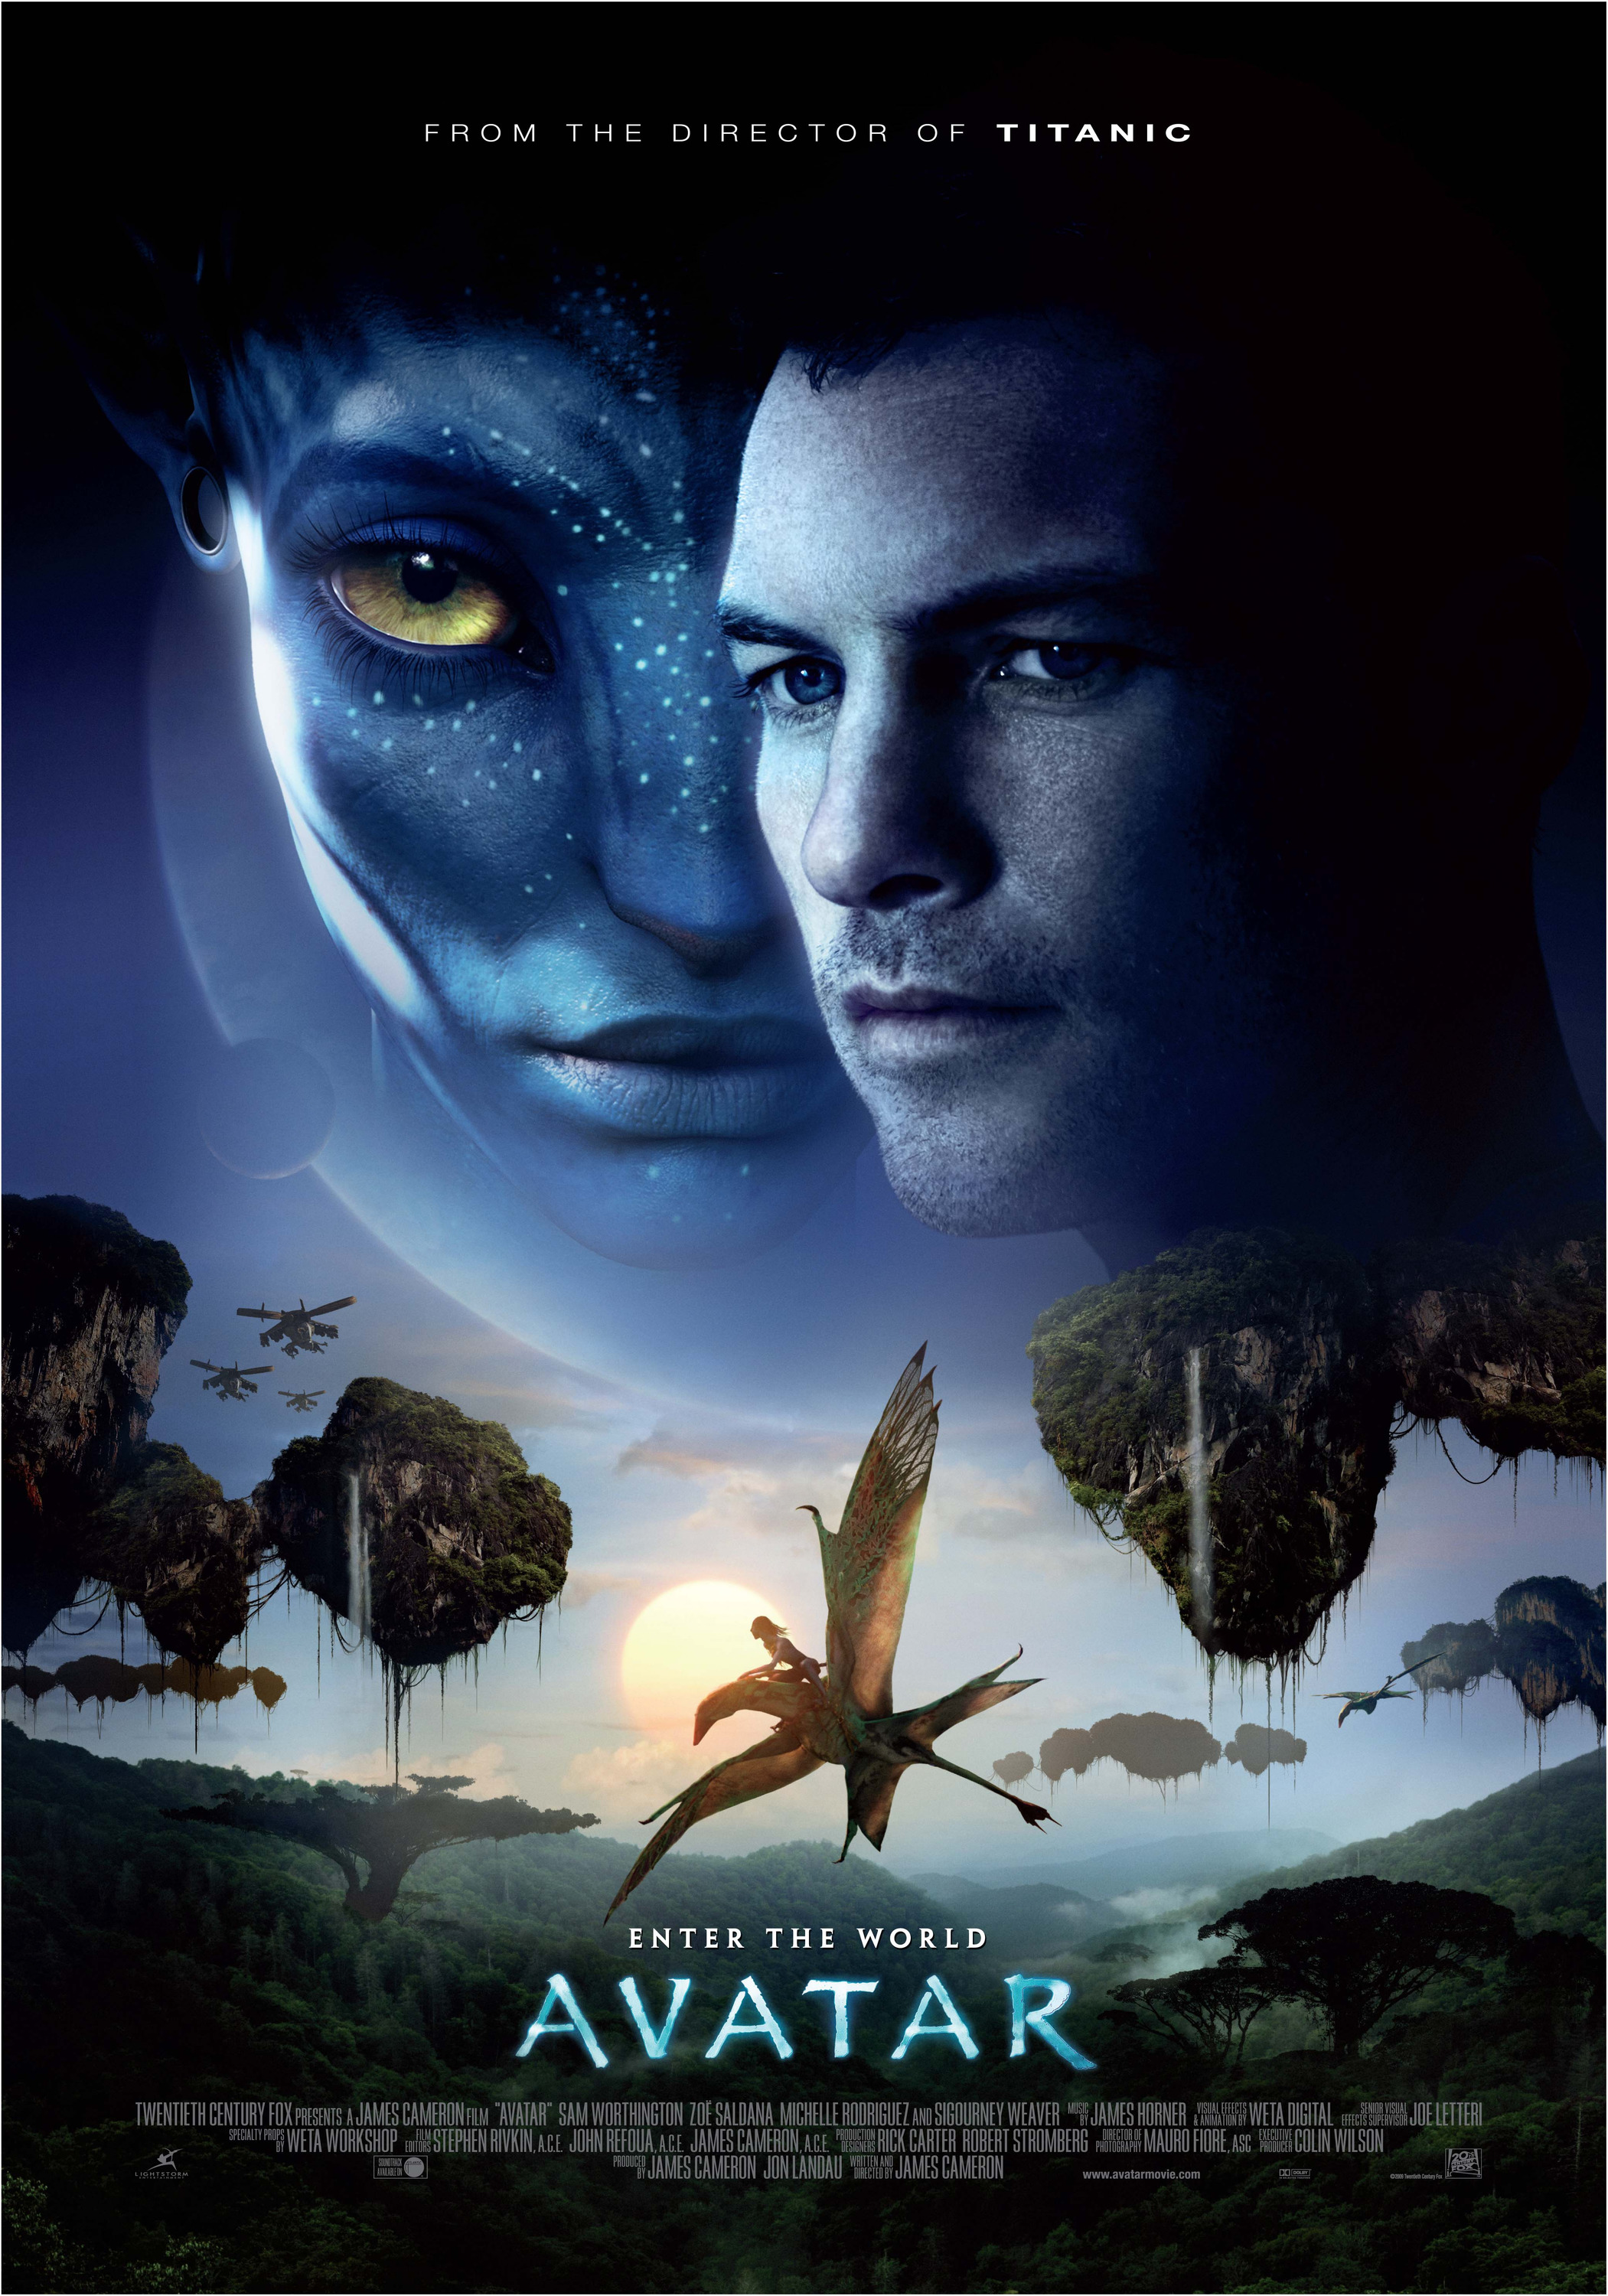 Mega Sized Movie Poster Image for Avatar (#4 of 11)